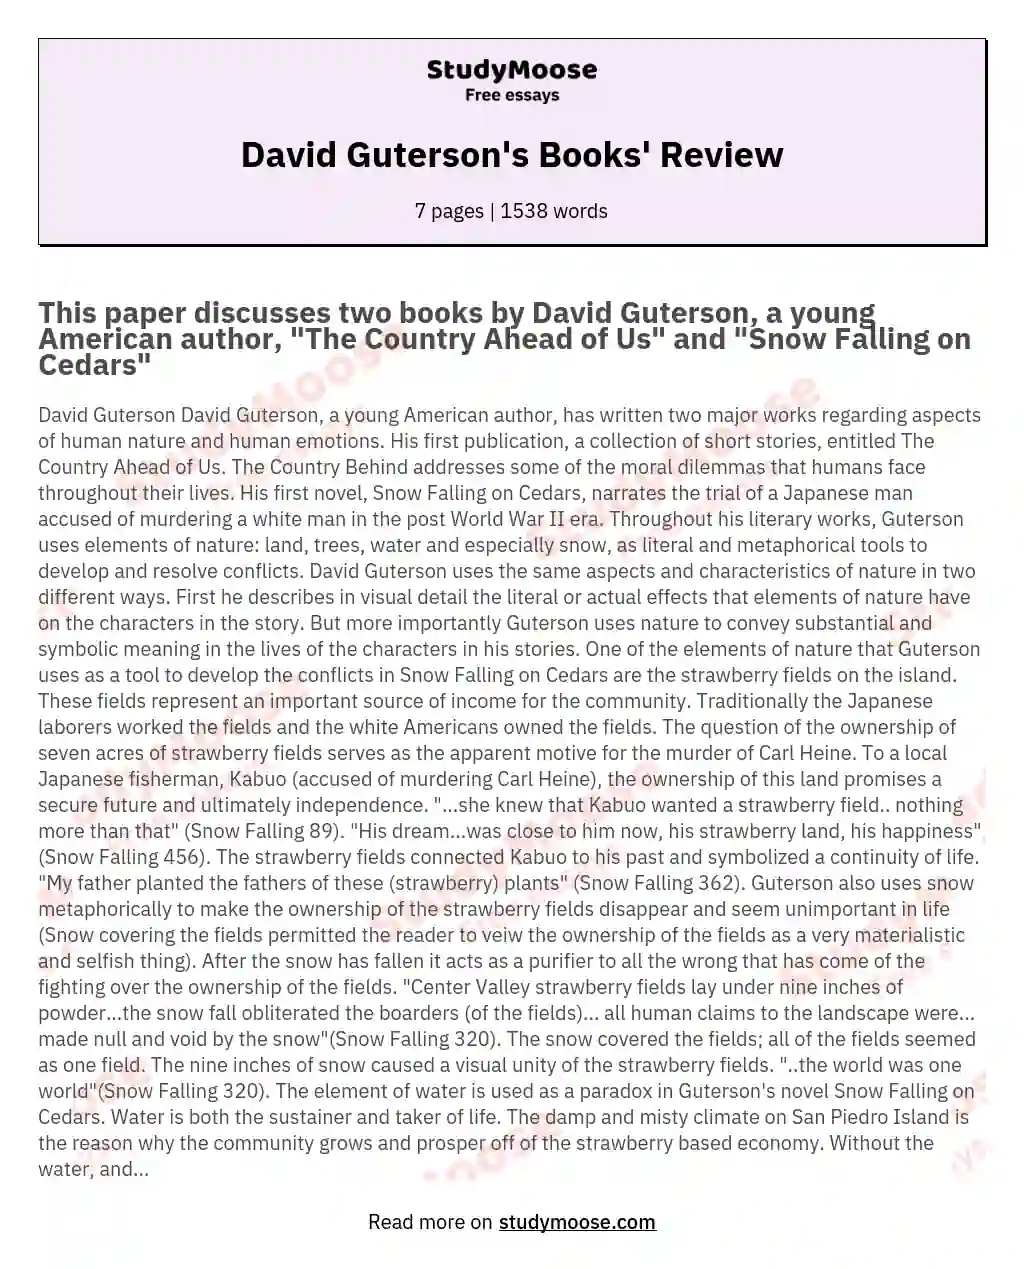 David Guterson's Books' Review essay